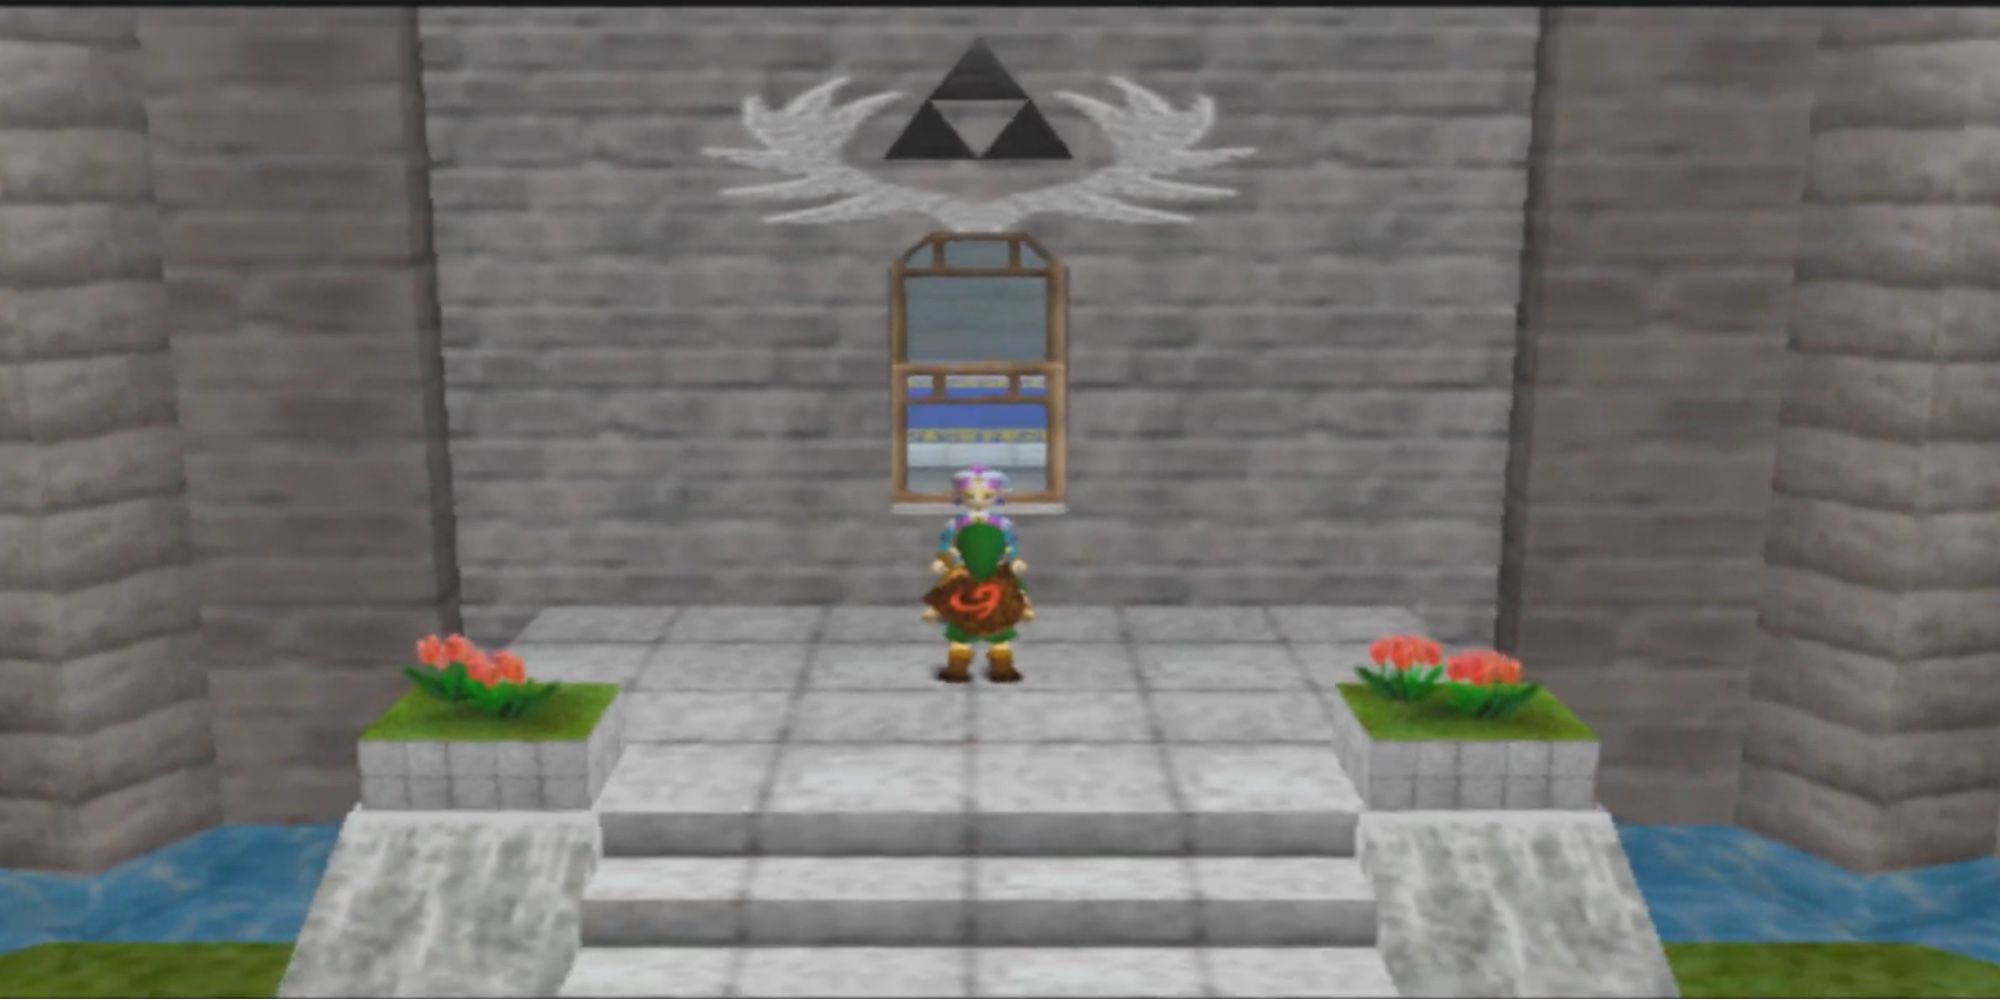 Legand of Zelda - Ocarina of Time - Link meets Zelda